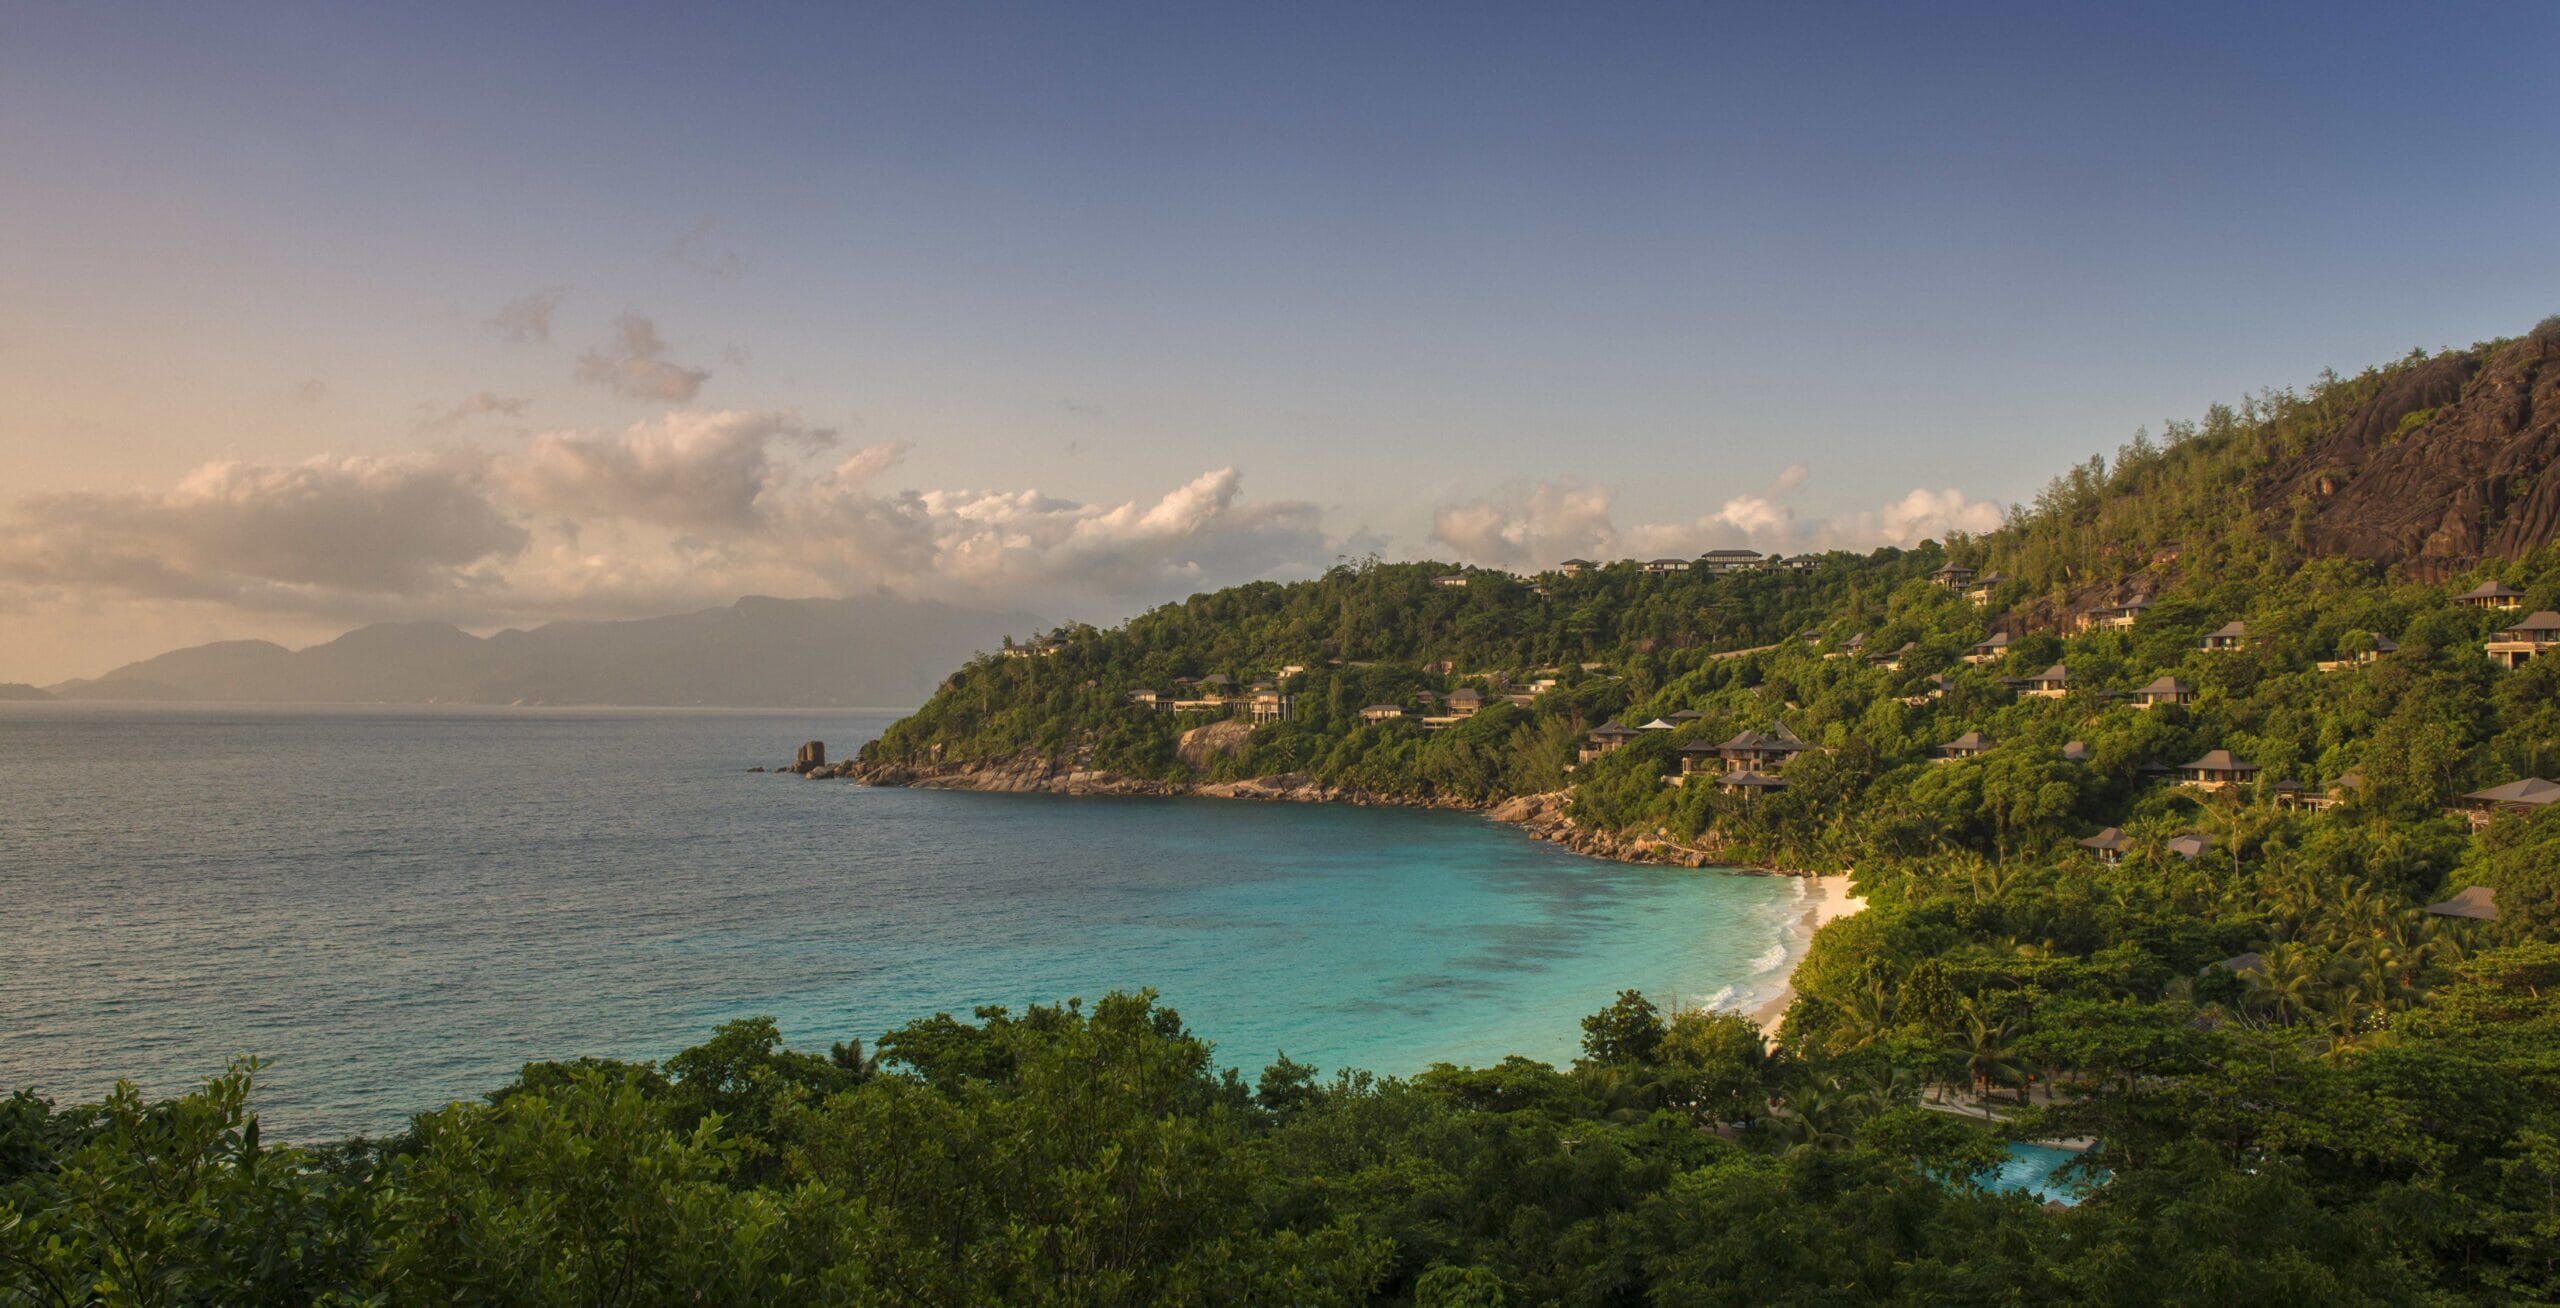 Four-Seasons-Petite-Anse-bay-Resort-view-scaled